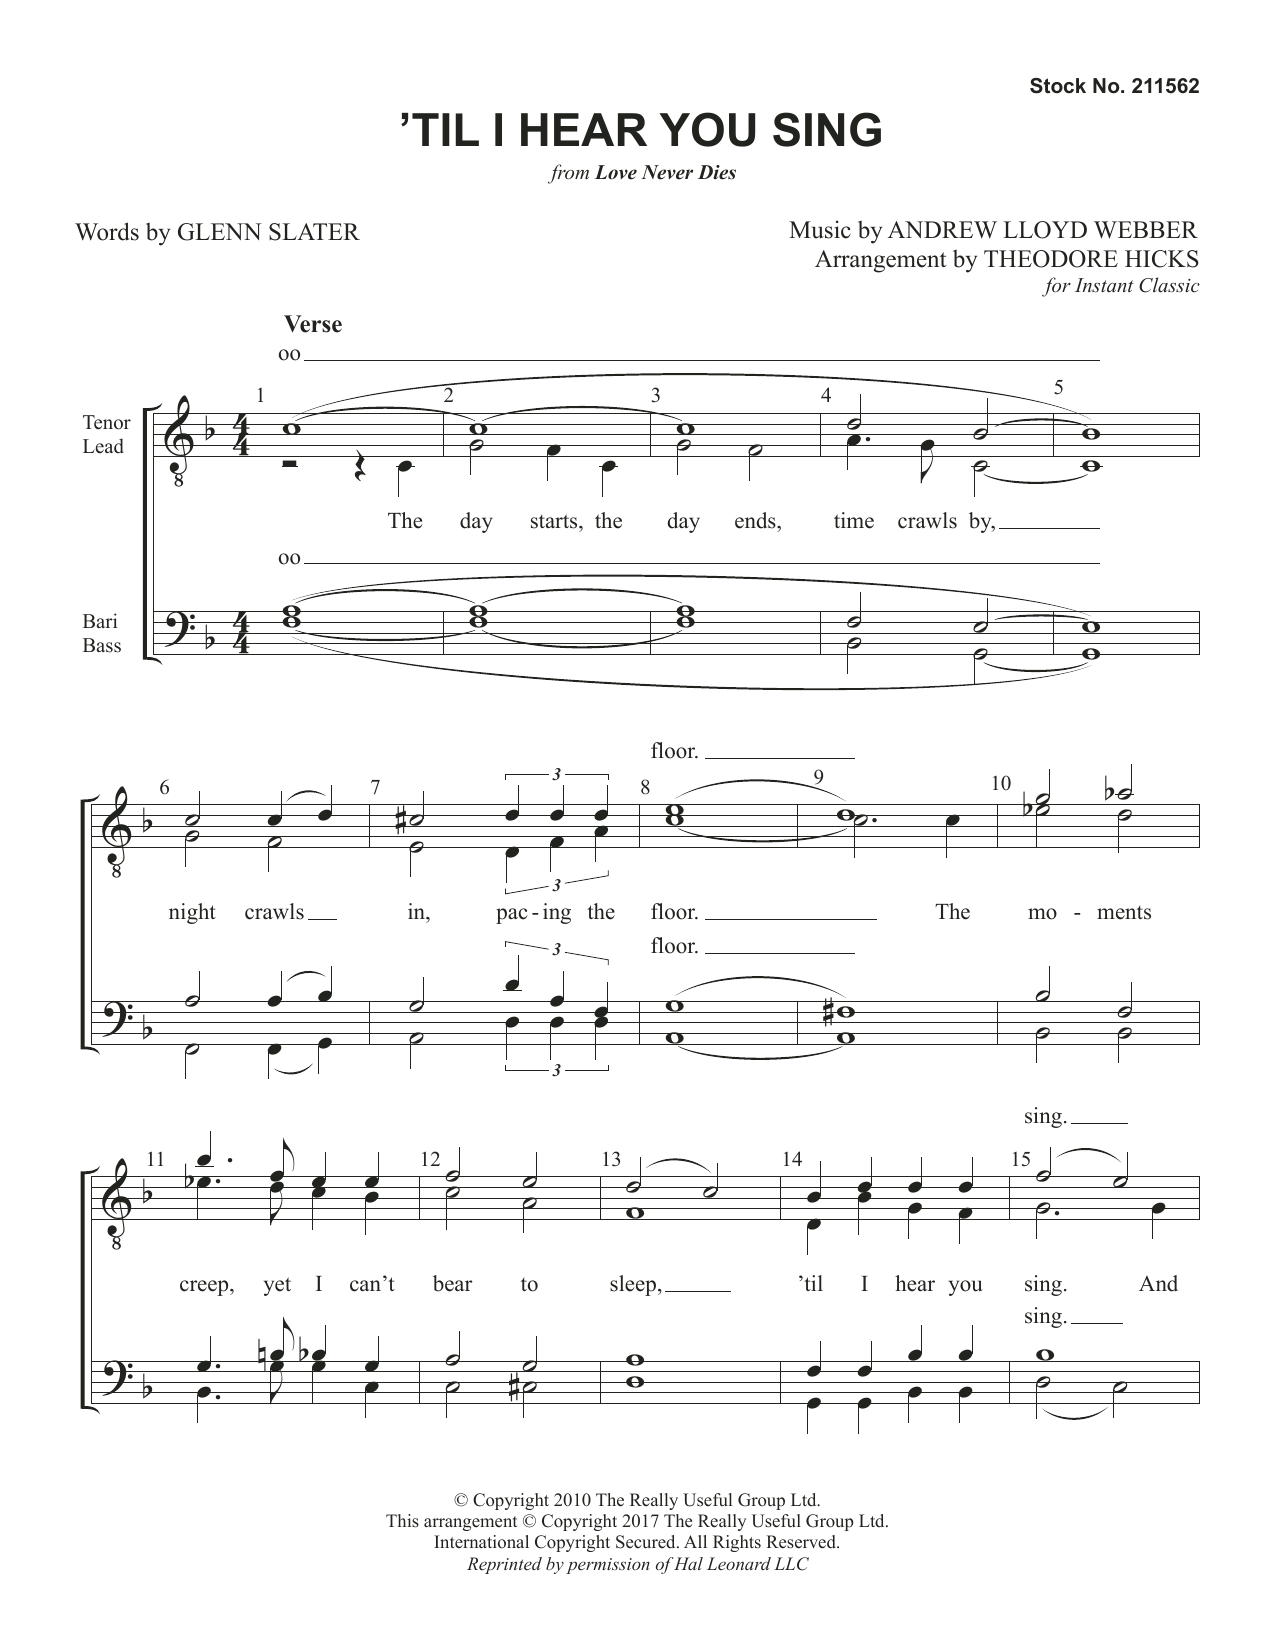 Andrew Lloyd Webber 'Til I Hear You Sing (from Love Never Dies) (arr. Theodore Hicks) sheet music notes and chords arranged for TTBB Choir